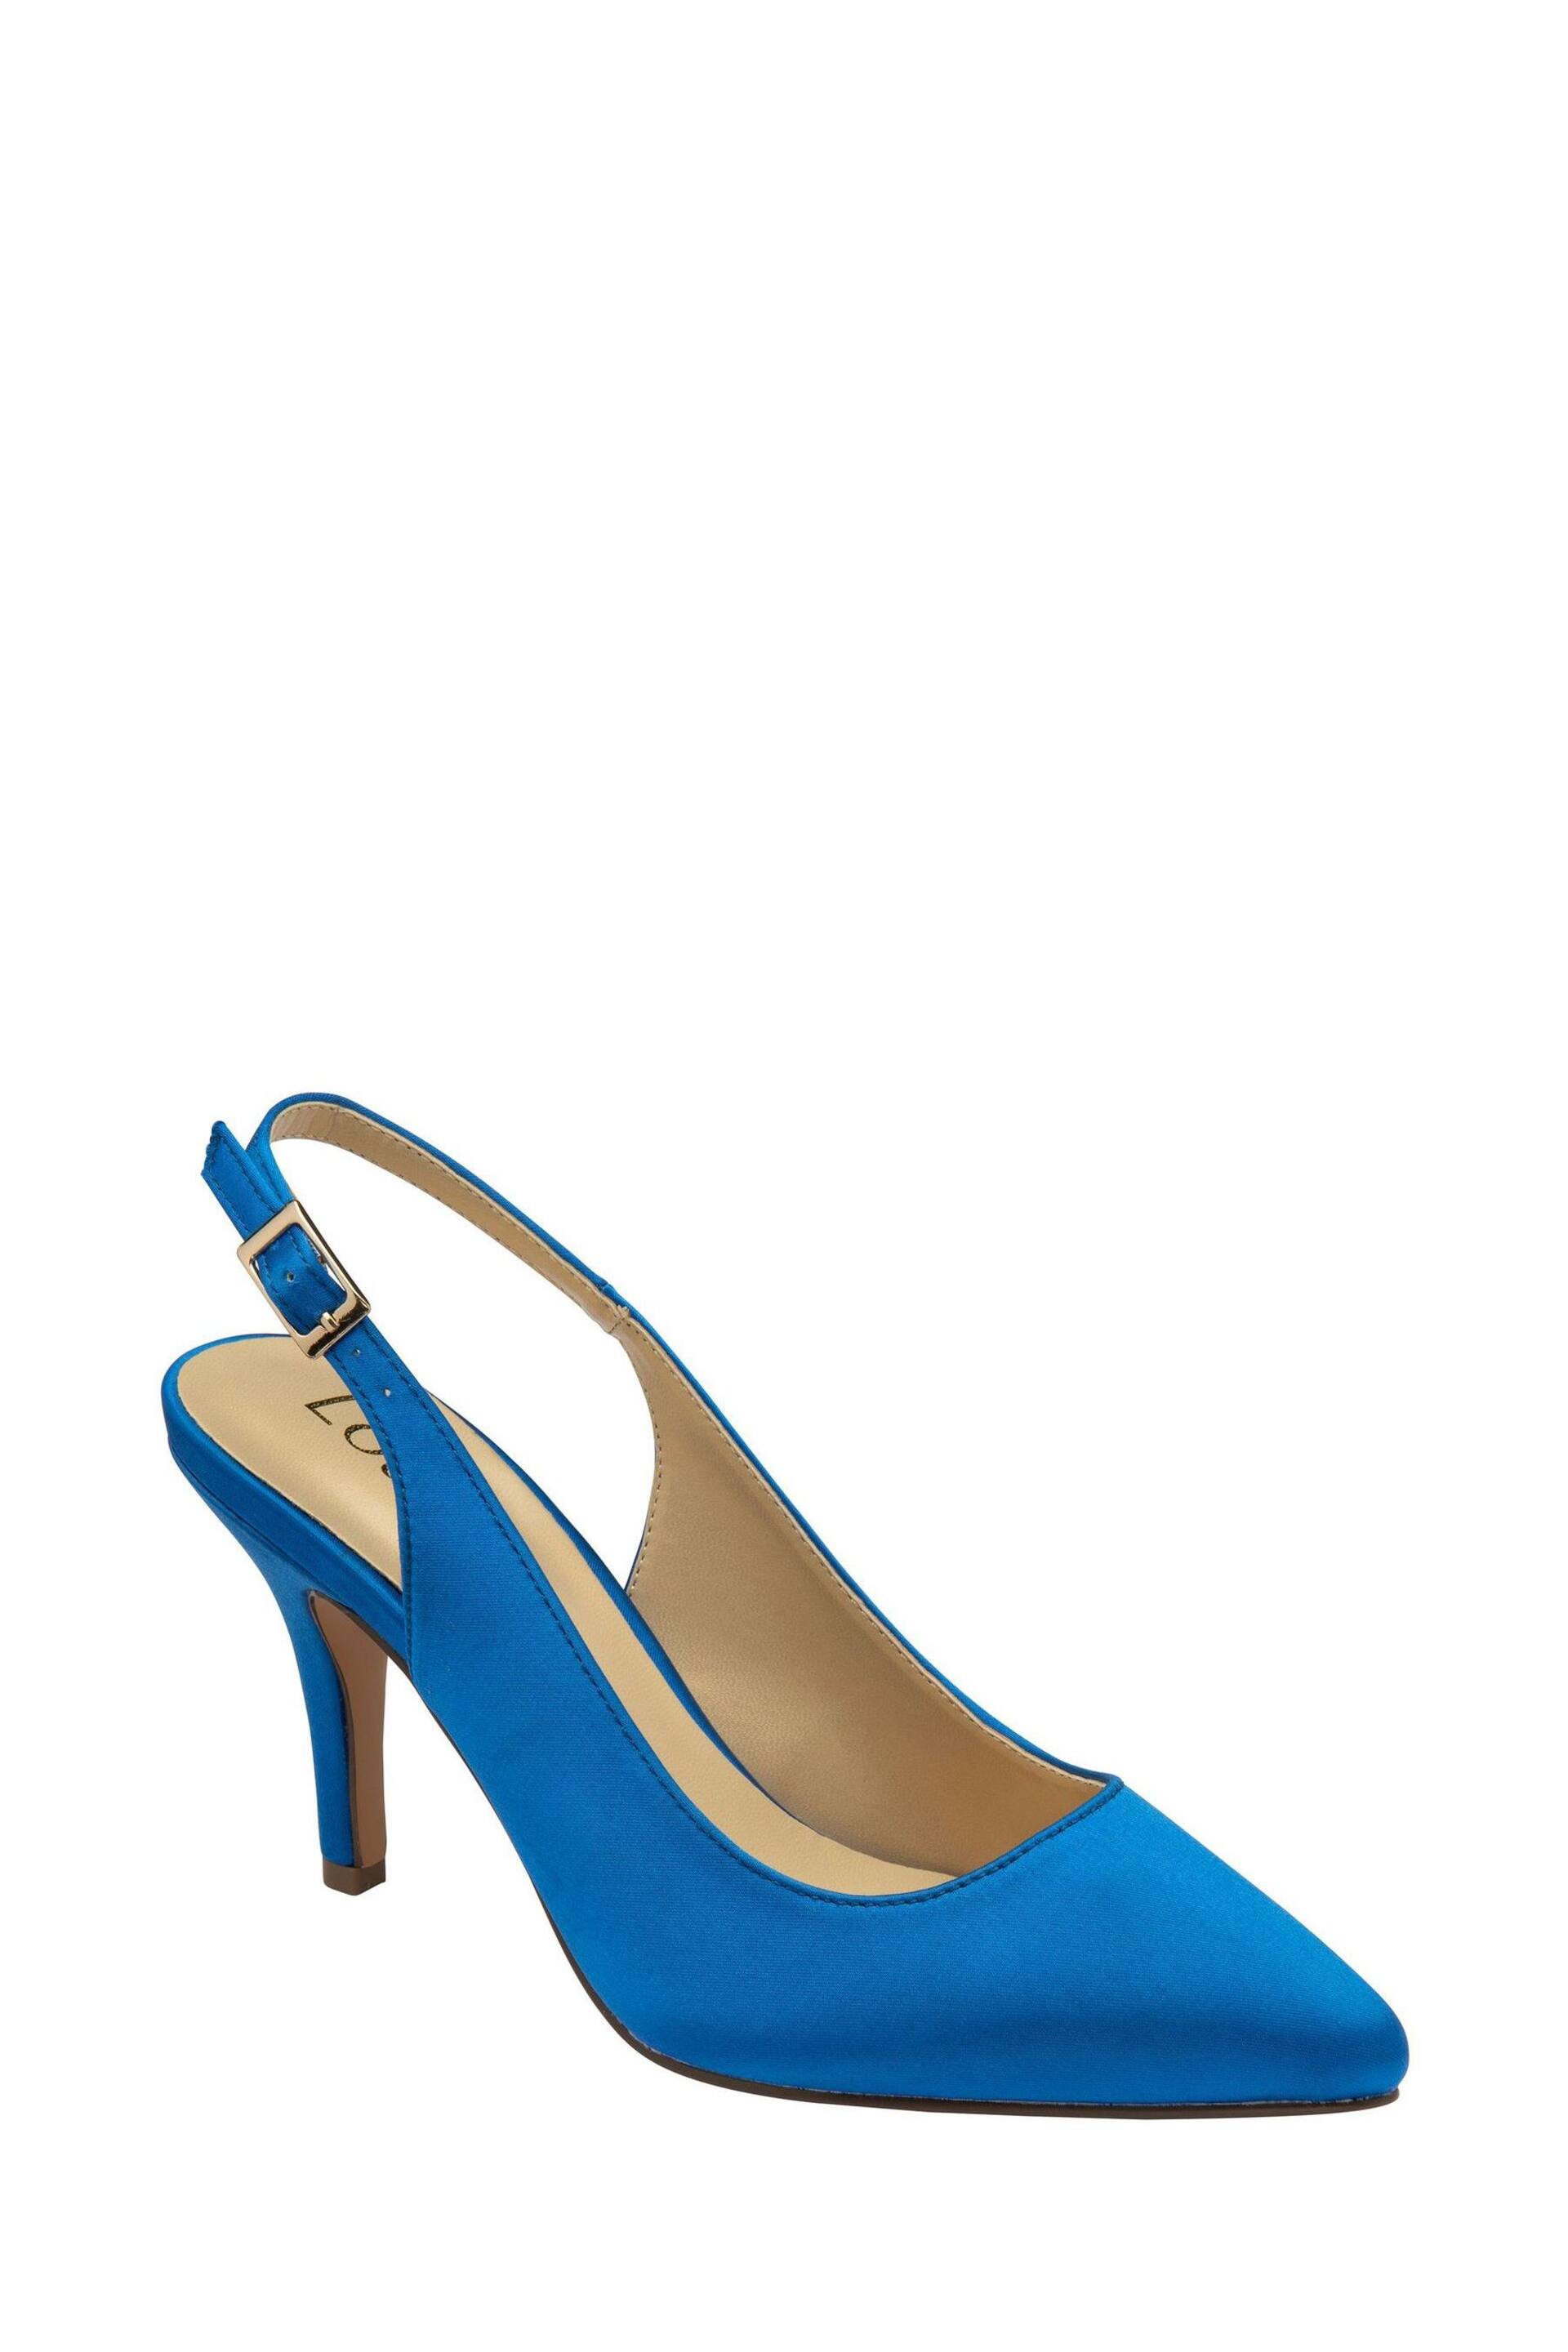 Lotus Blue Slingback Court Shoes - Image 1 of 4